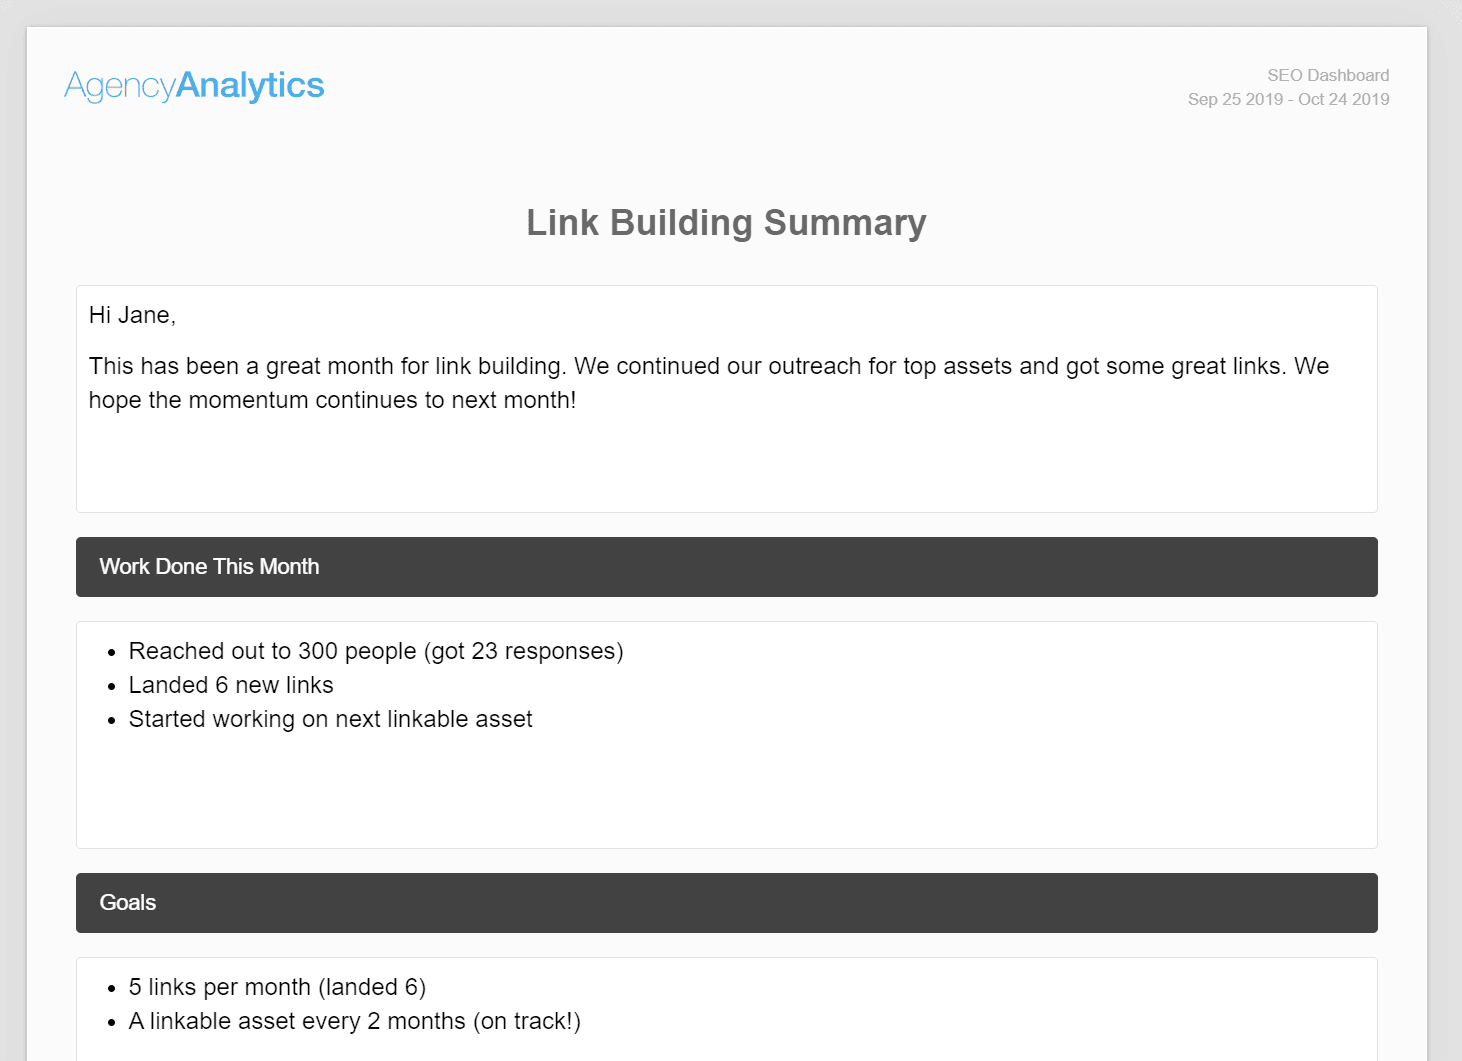 Link building report summary